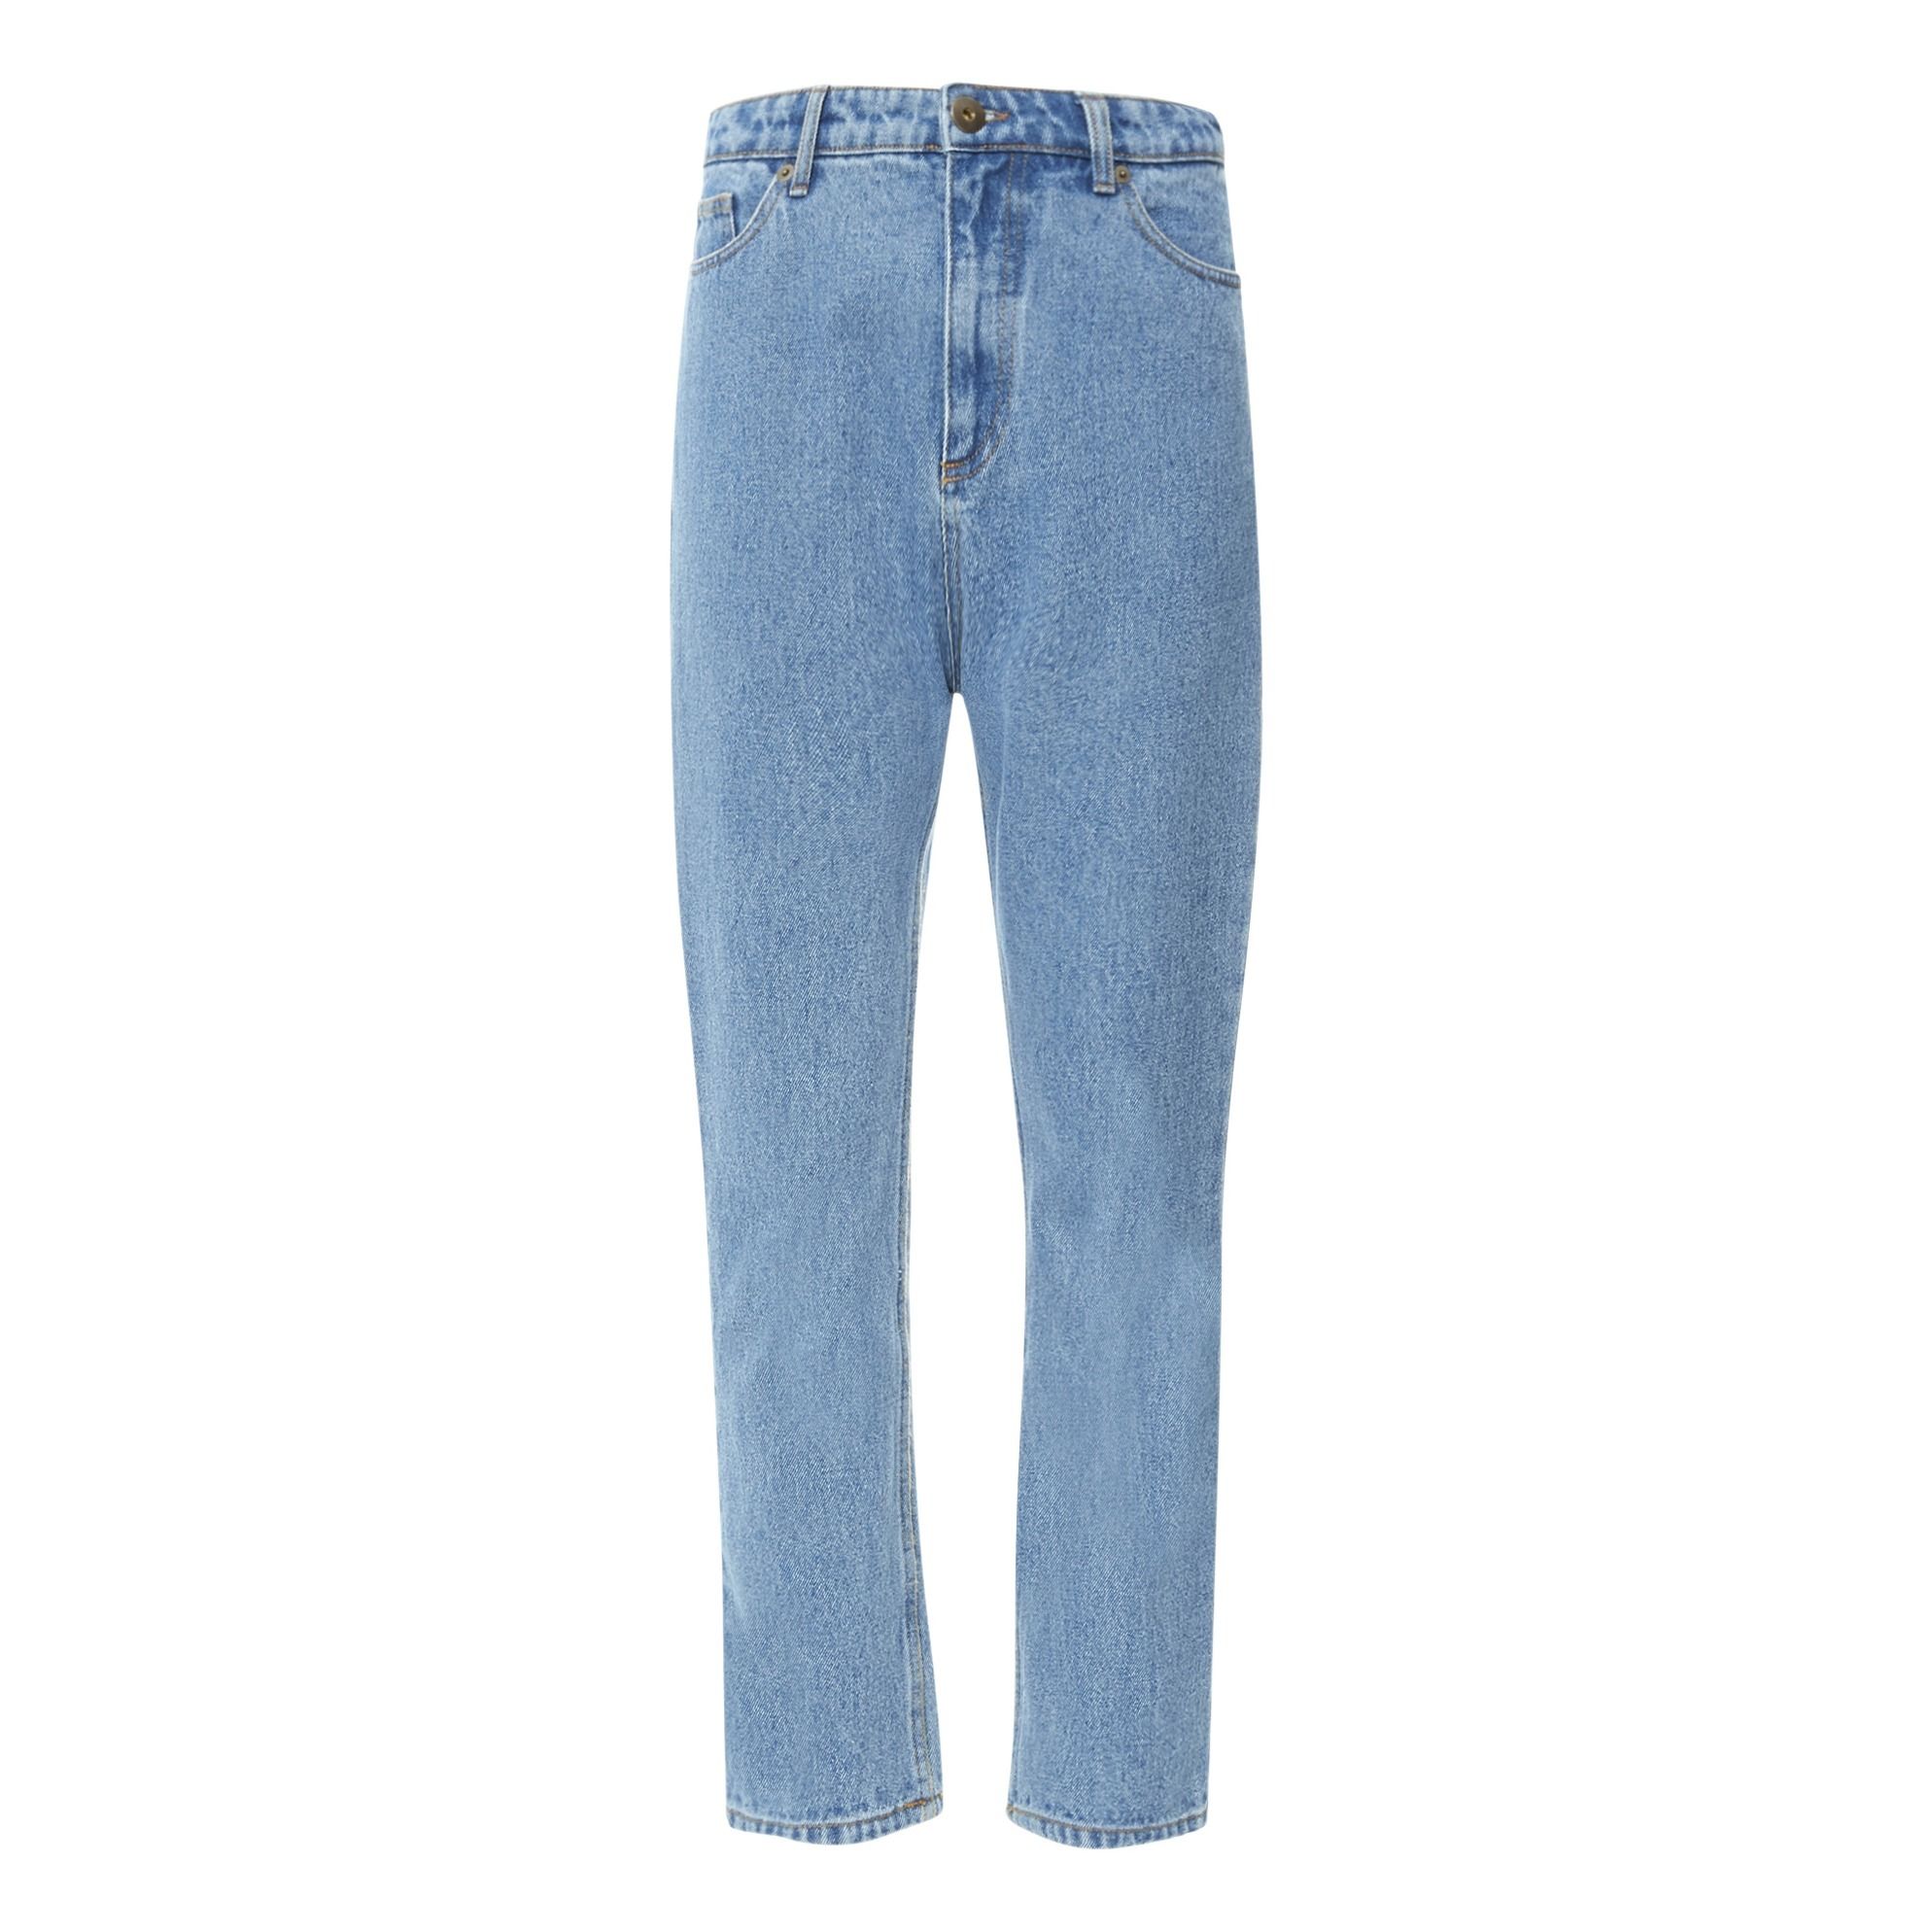 Maison Père - Pantalon en Denim - Femme - Bleu jean